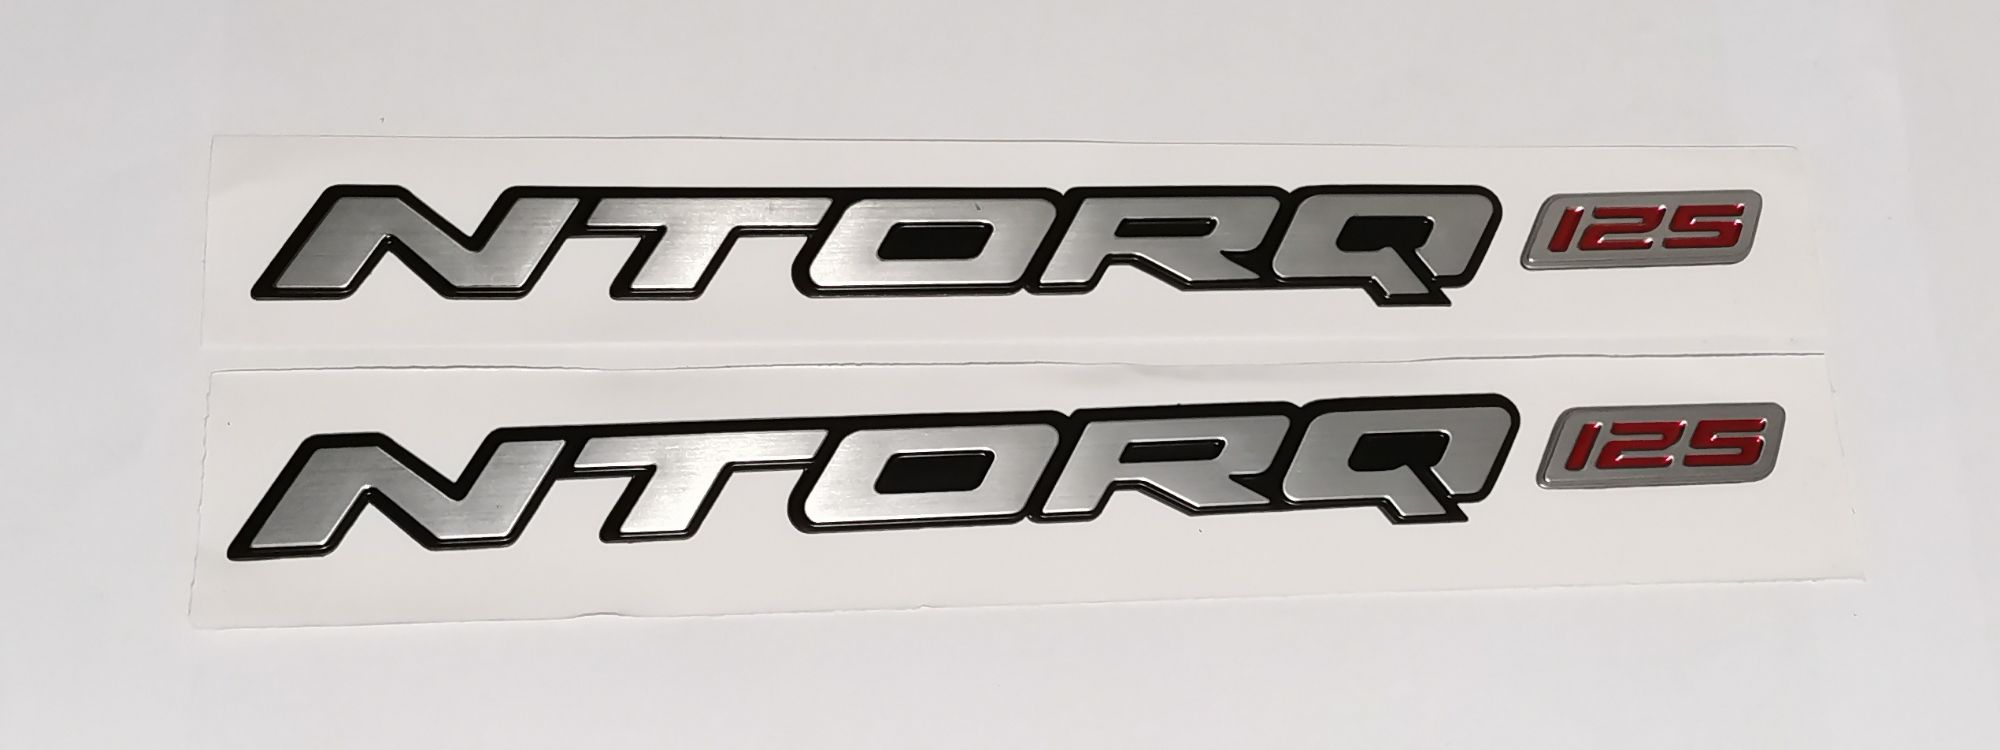 Talk the Torq — TVS NTorq 125 Review - Motoring World